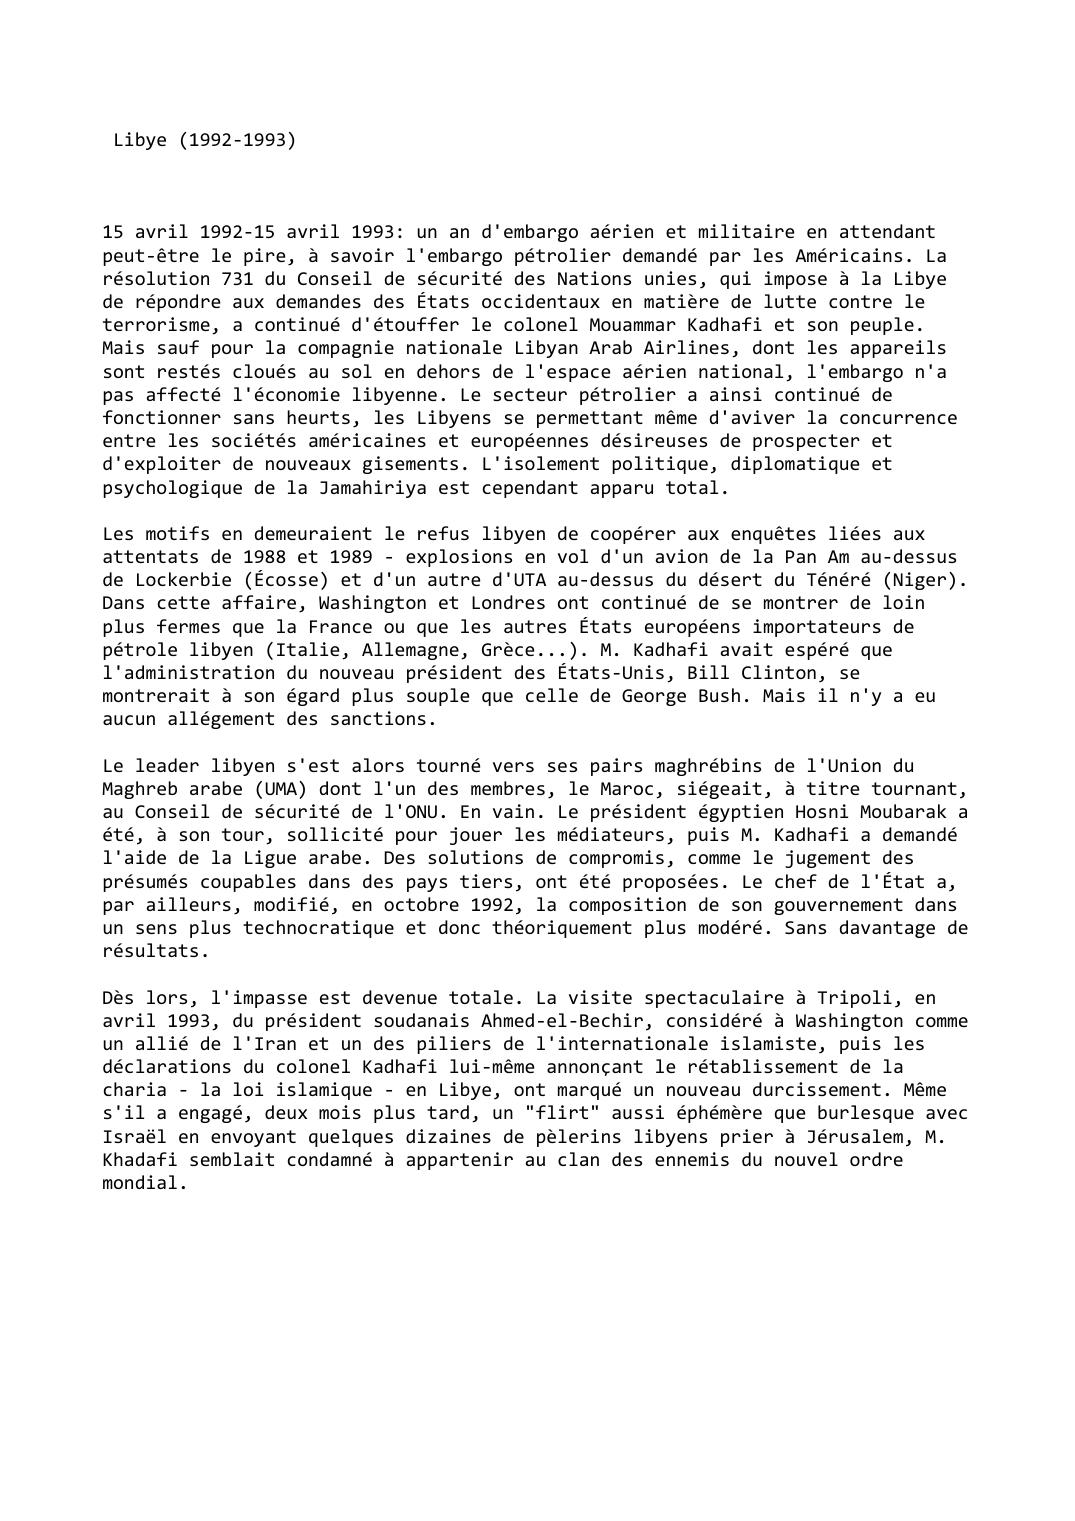 Prévisualisation du document Libye (1992-1993)